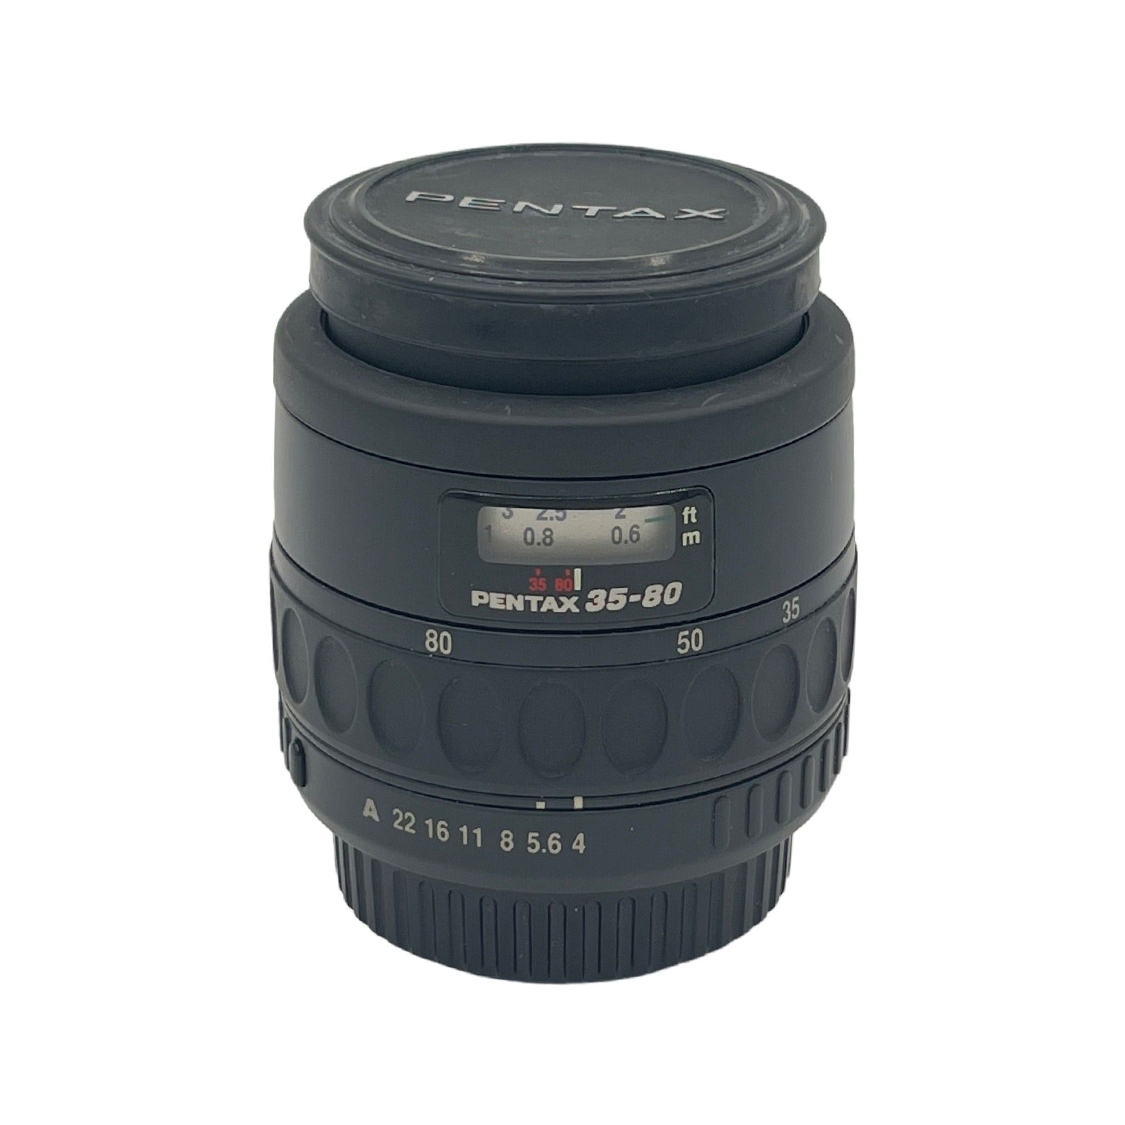 Pentax-F 35-80mm F4-5.6 SMC (BGN) Used Lens